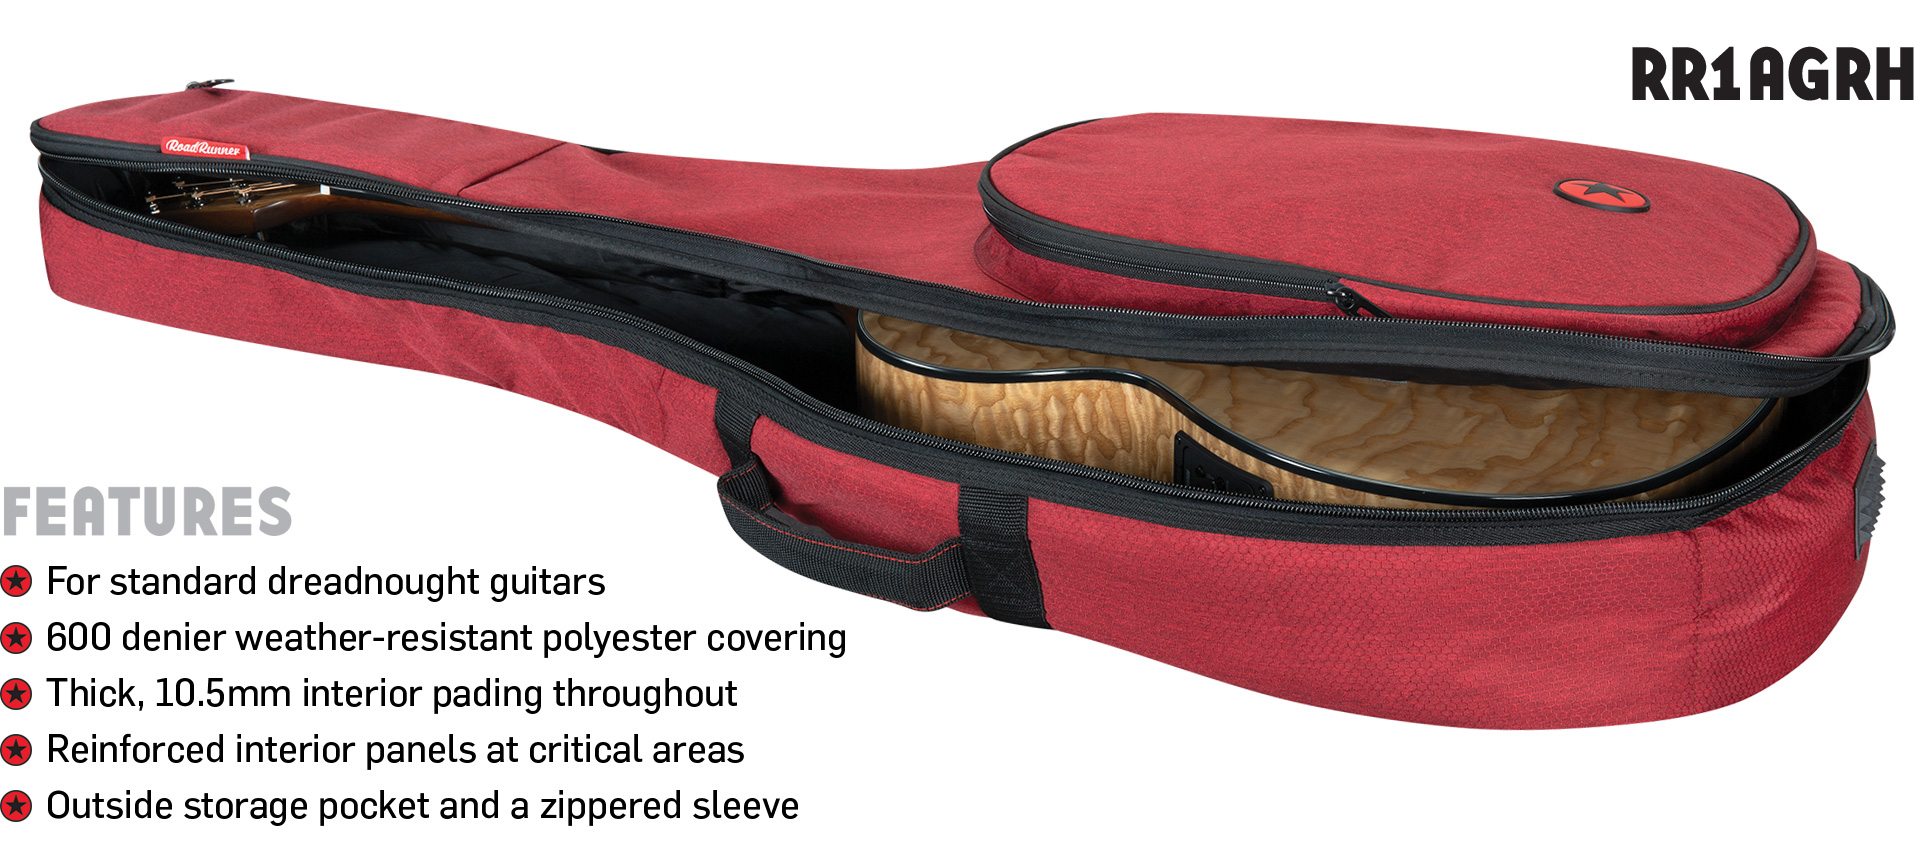 Road Runner RR1AGRH Acoustic Guitar Bag Red Honeycomb